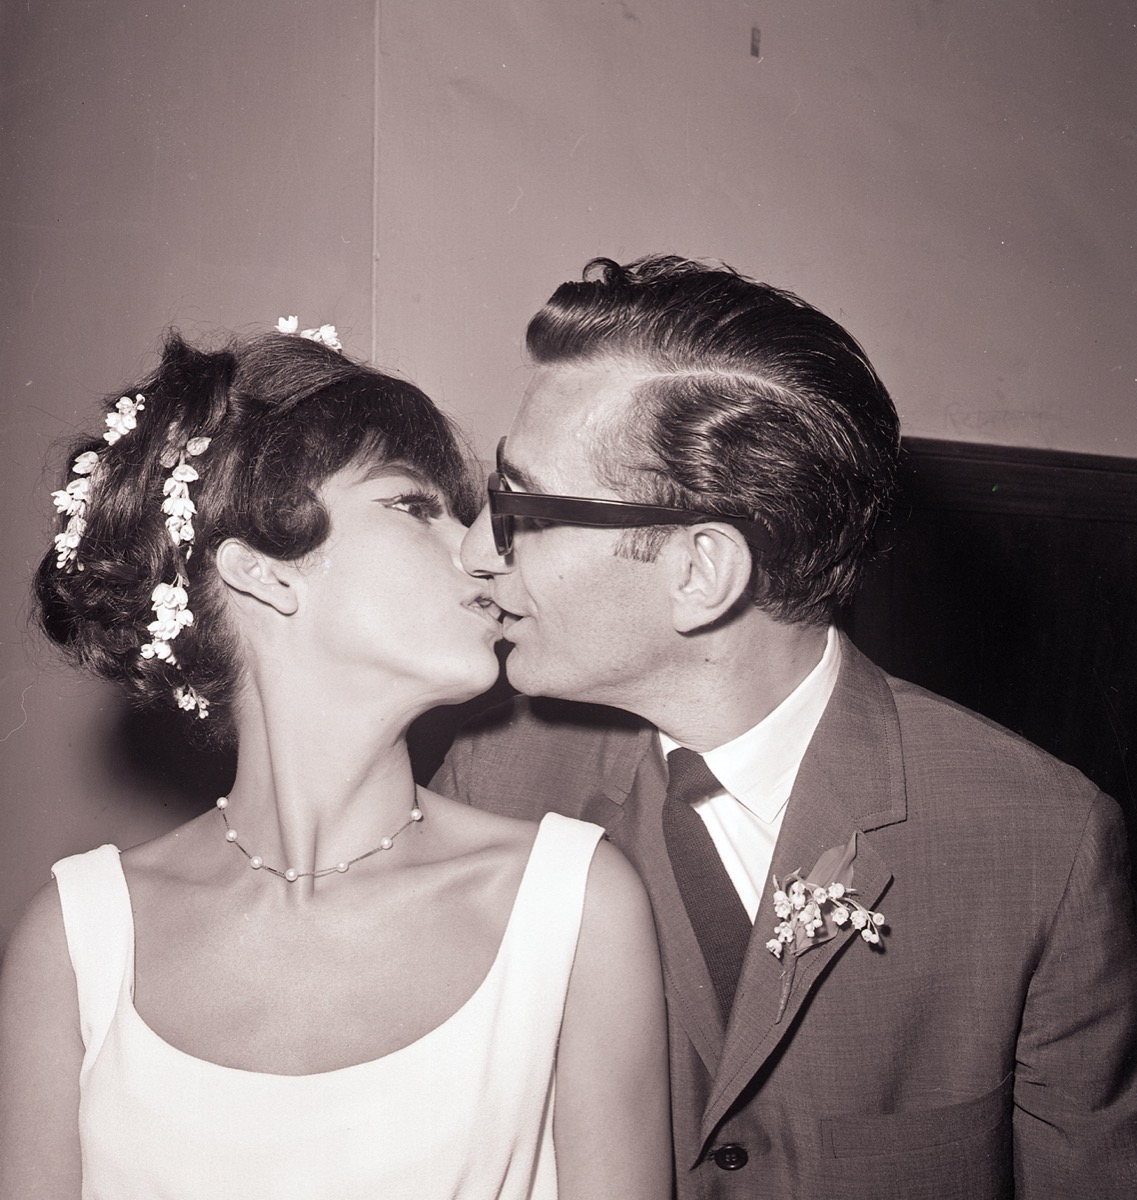 Rita Moreno and Leonard Gordon after their wedding